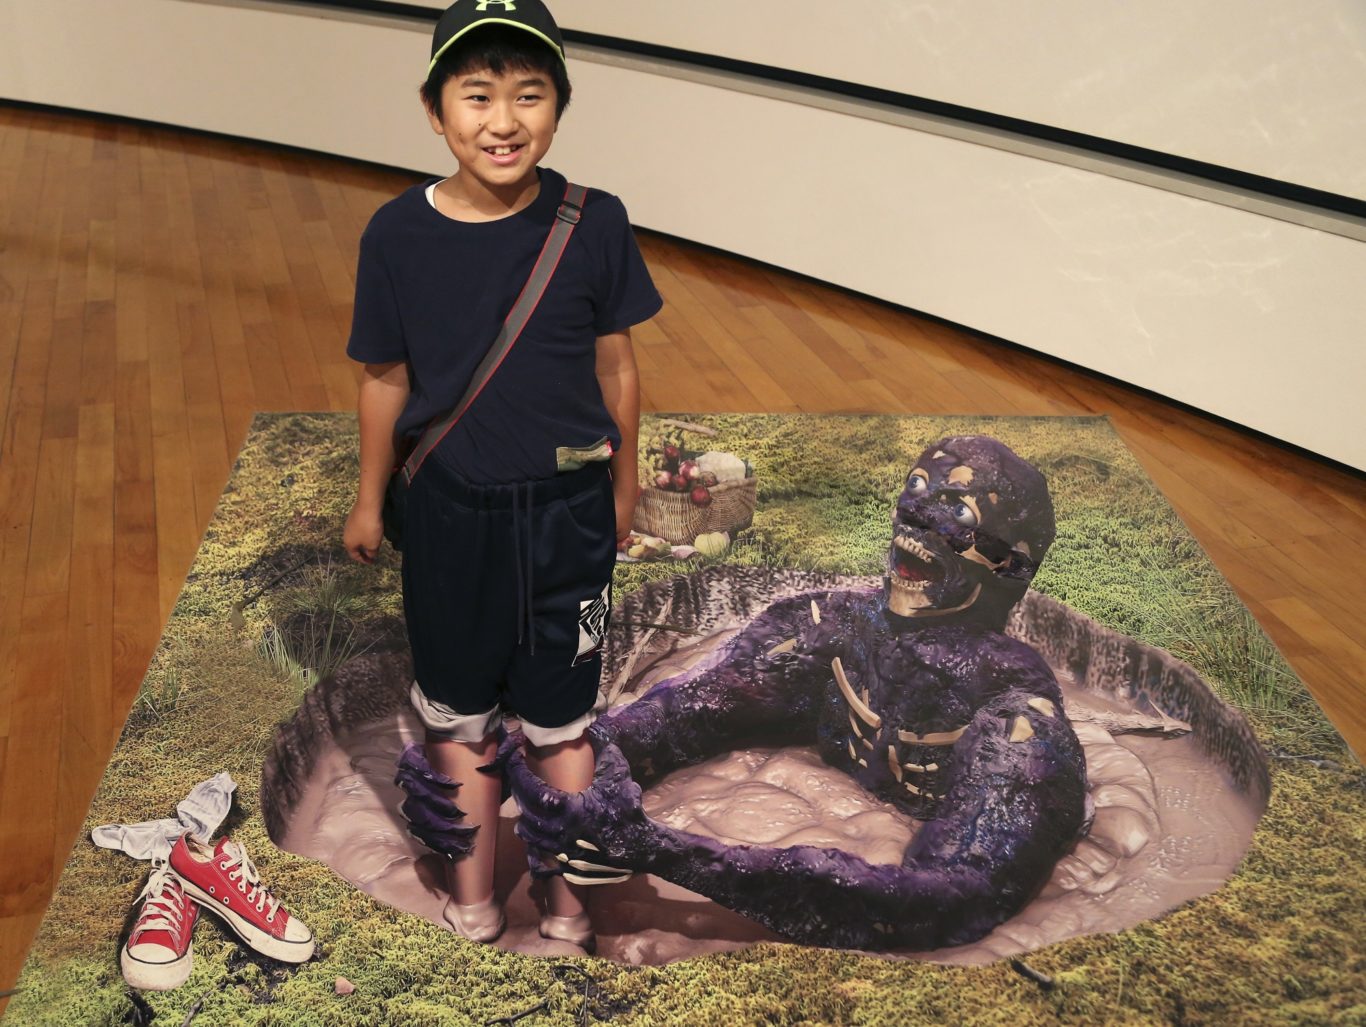 A boy poses with a 3D image at a 3D trick art exhibition by Japanese artist Masashi Hattori in Kawasaki, near Tokyo, Saturday, Aug. 5, 2017. (Koji Sasahara/AP/PA